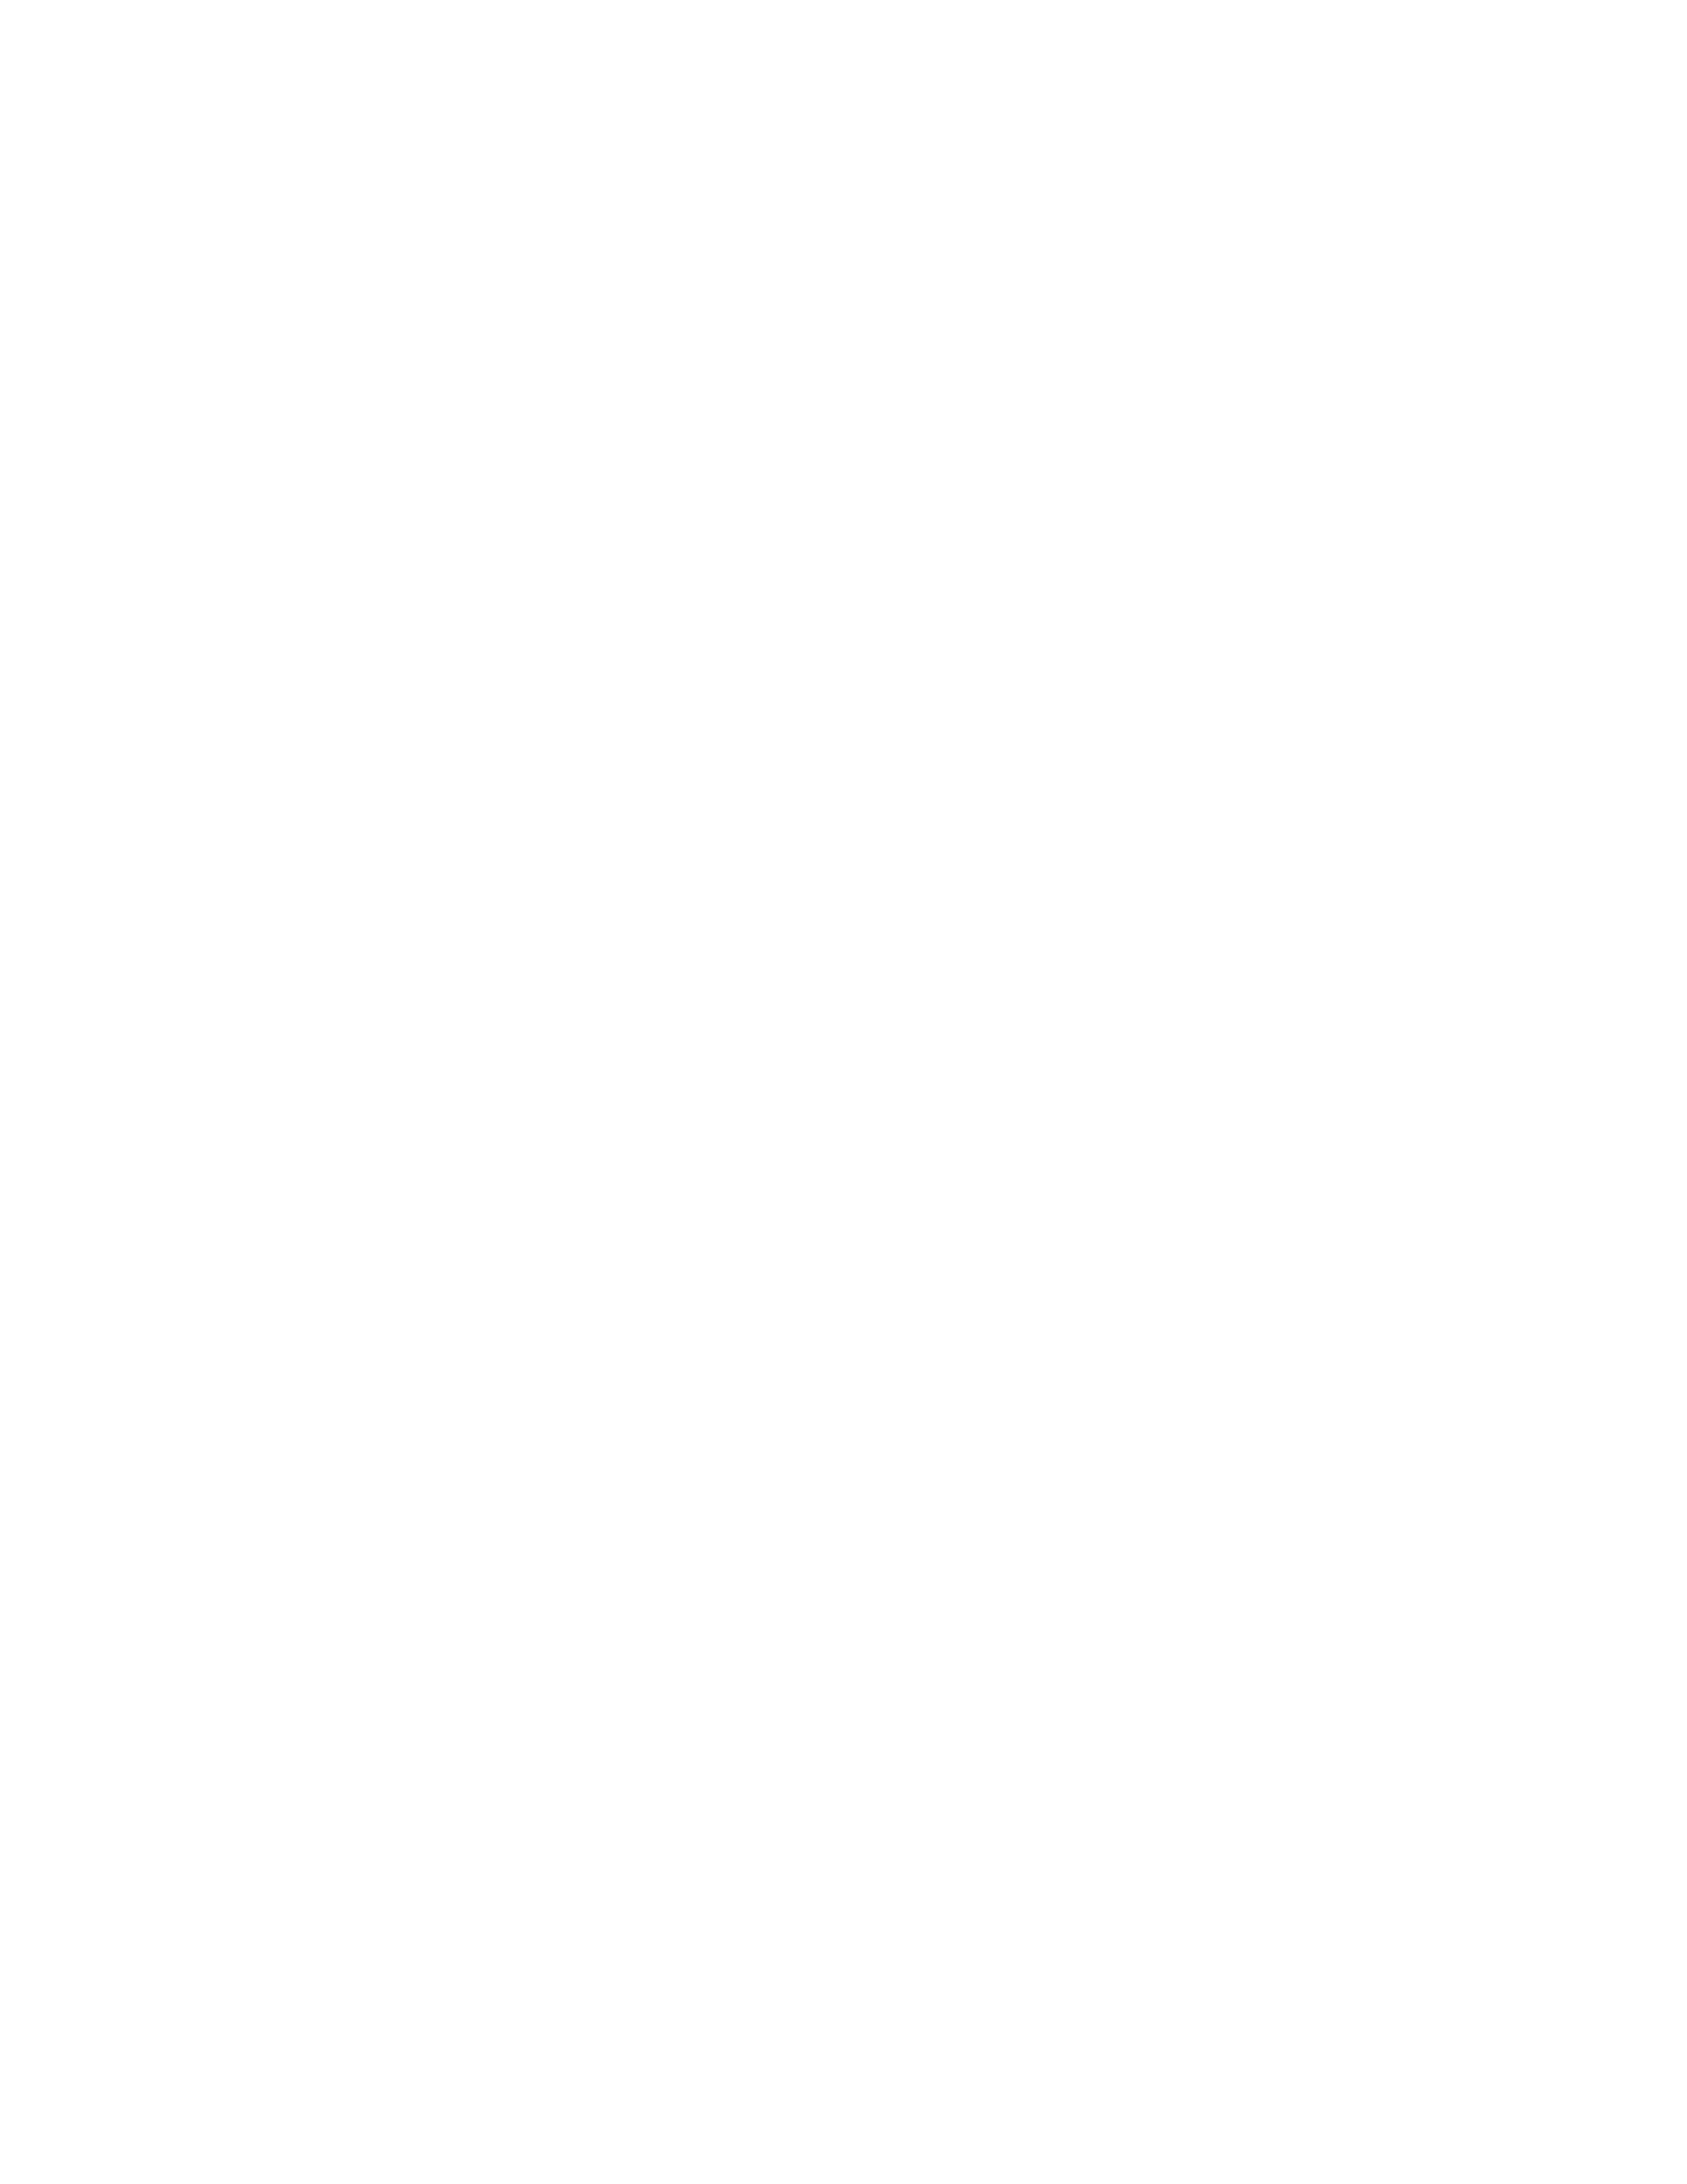 90TH ANNIVERSARY NISSAN